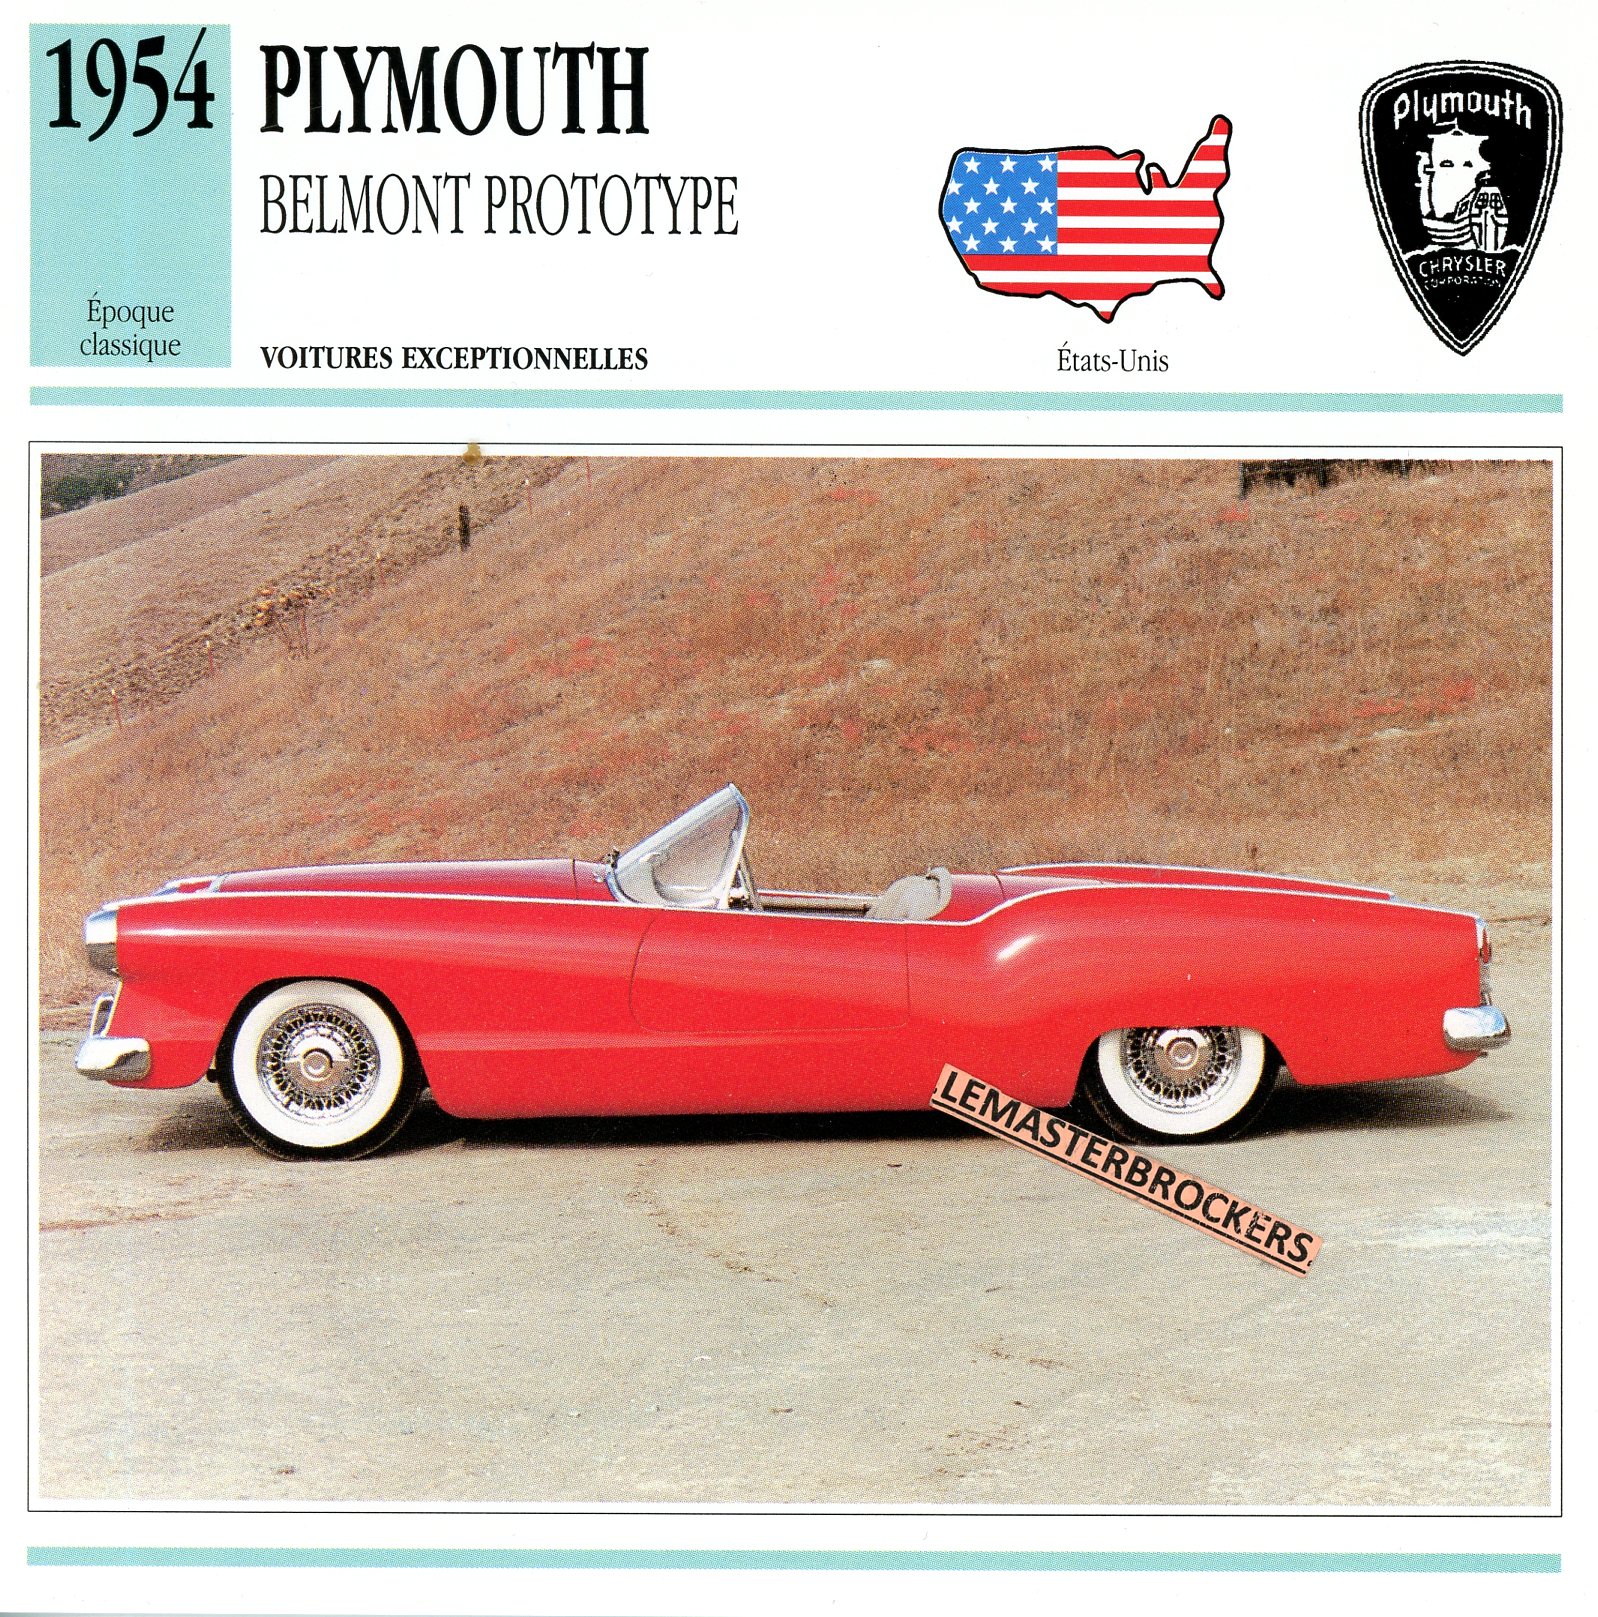 PLYMOUTH-BELMONT-PROTOTYPE-1954-FICHE-AUTO-LEMASTERBROCKERS-ATLAS-ÉDITION